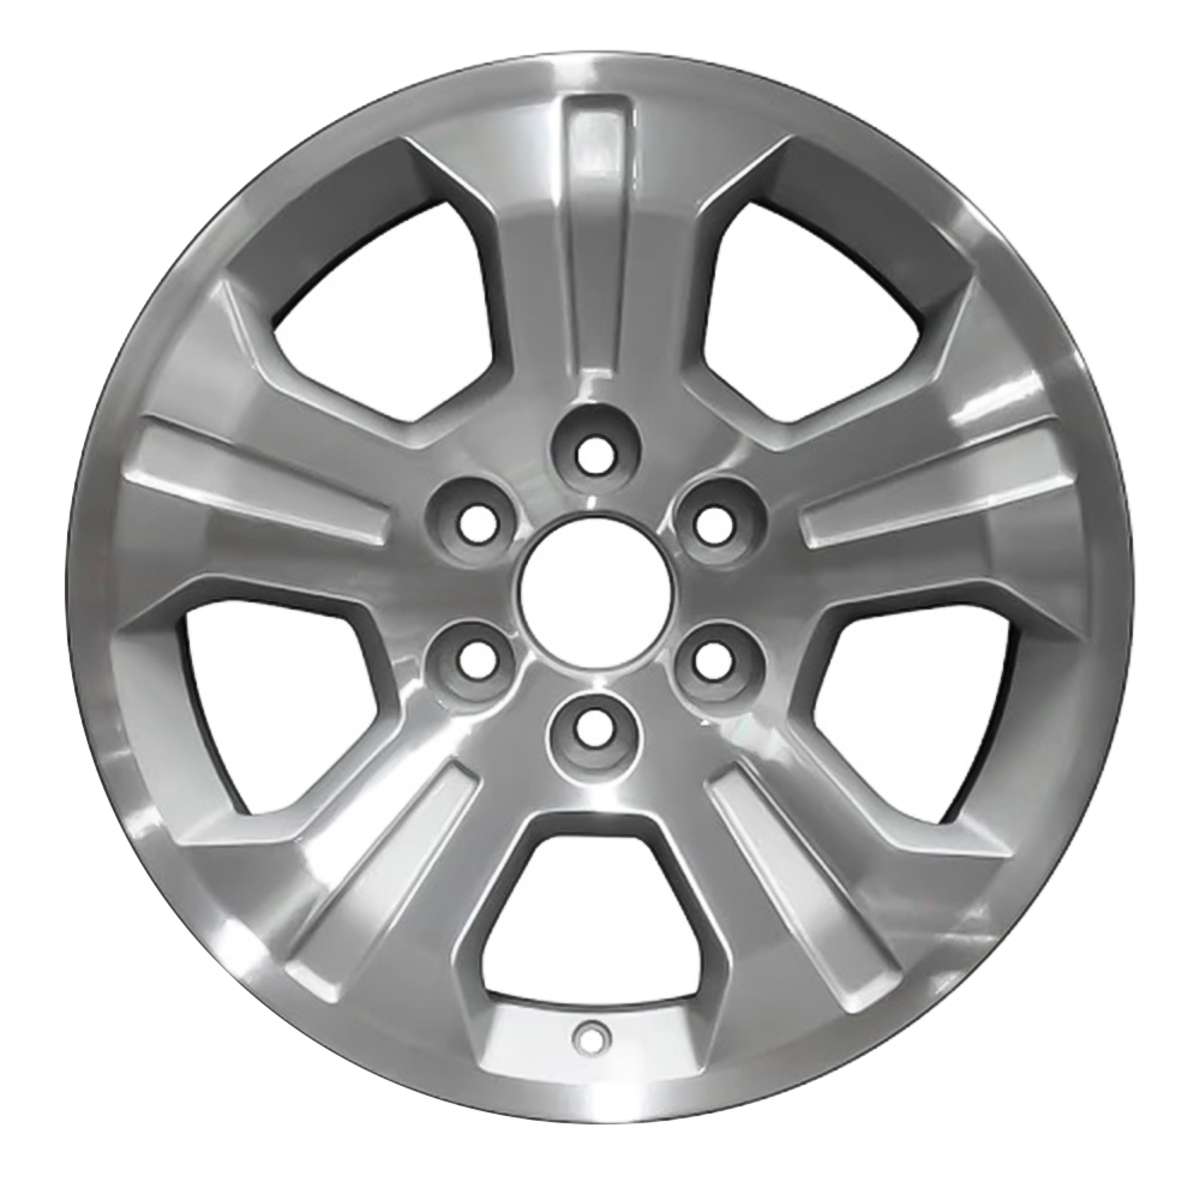 2014 Chevrolet Silverado 1500 New 18" Replacement Wheel Rim RW5647MS